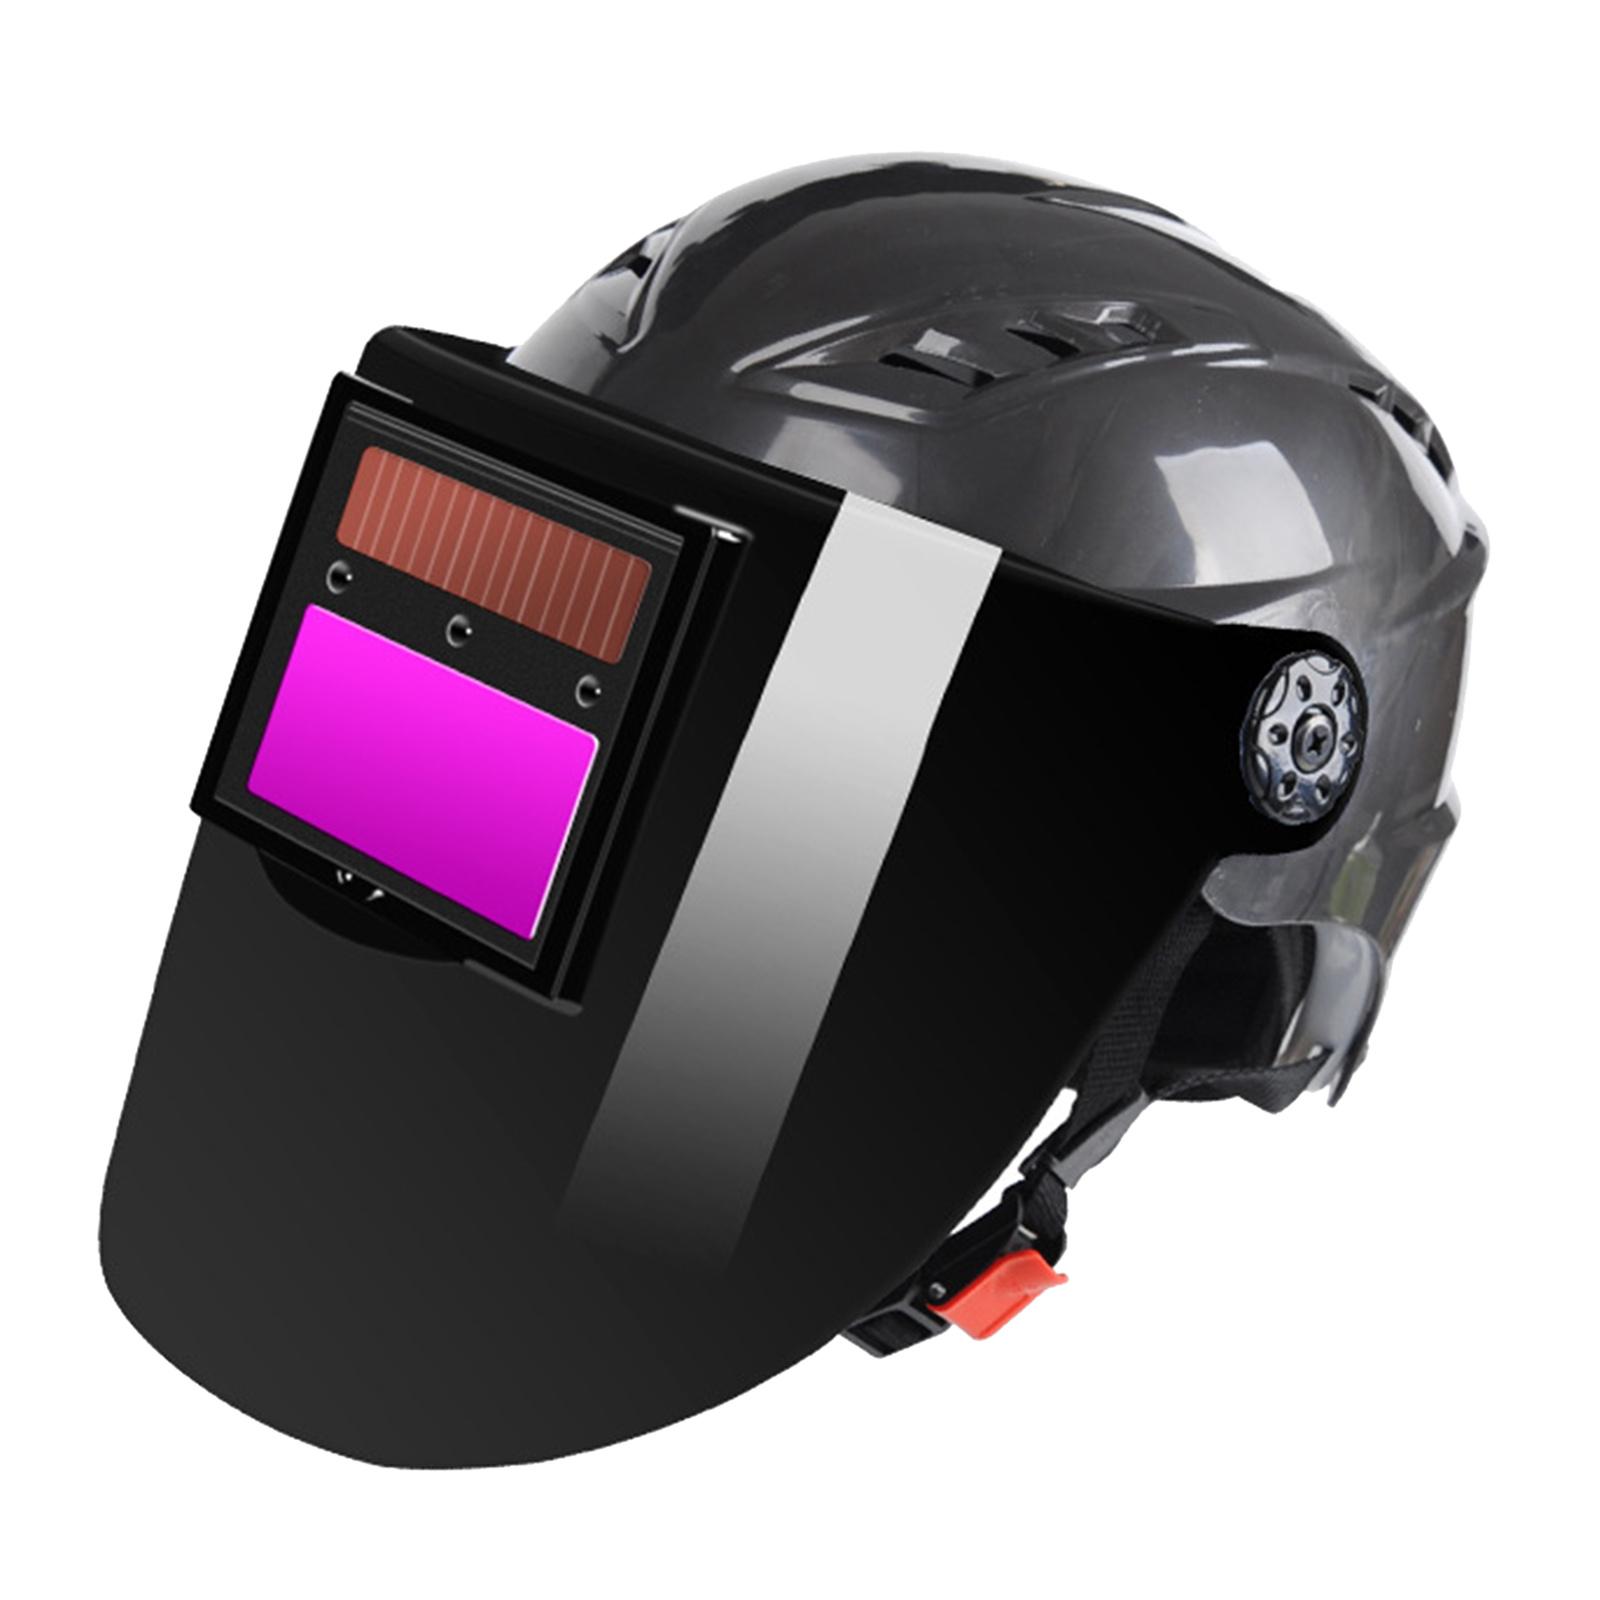 Welding Mask Helmet Hood Eye Protect for Grinding ARC MIG TIG Welding Black